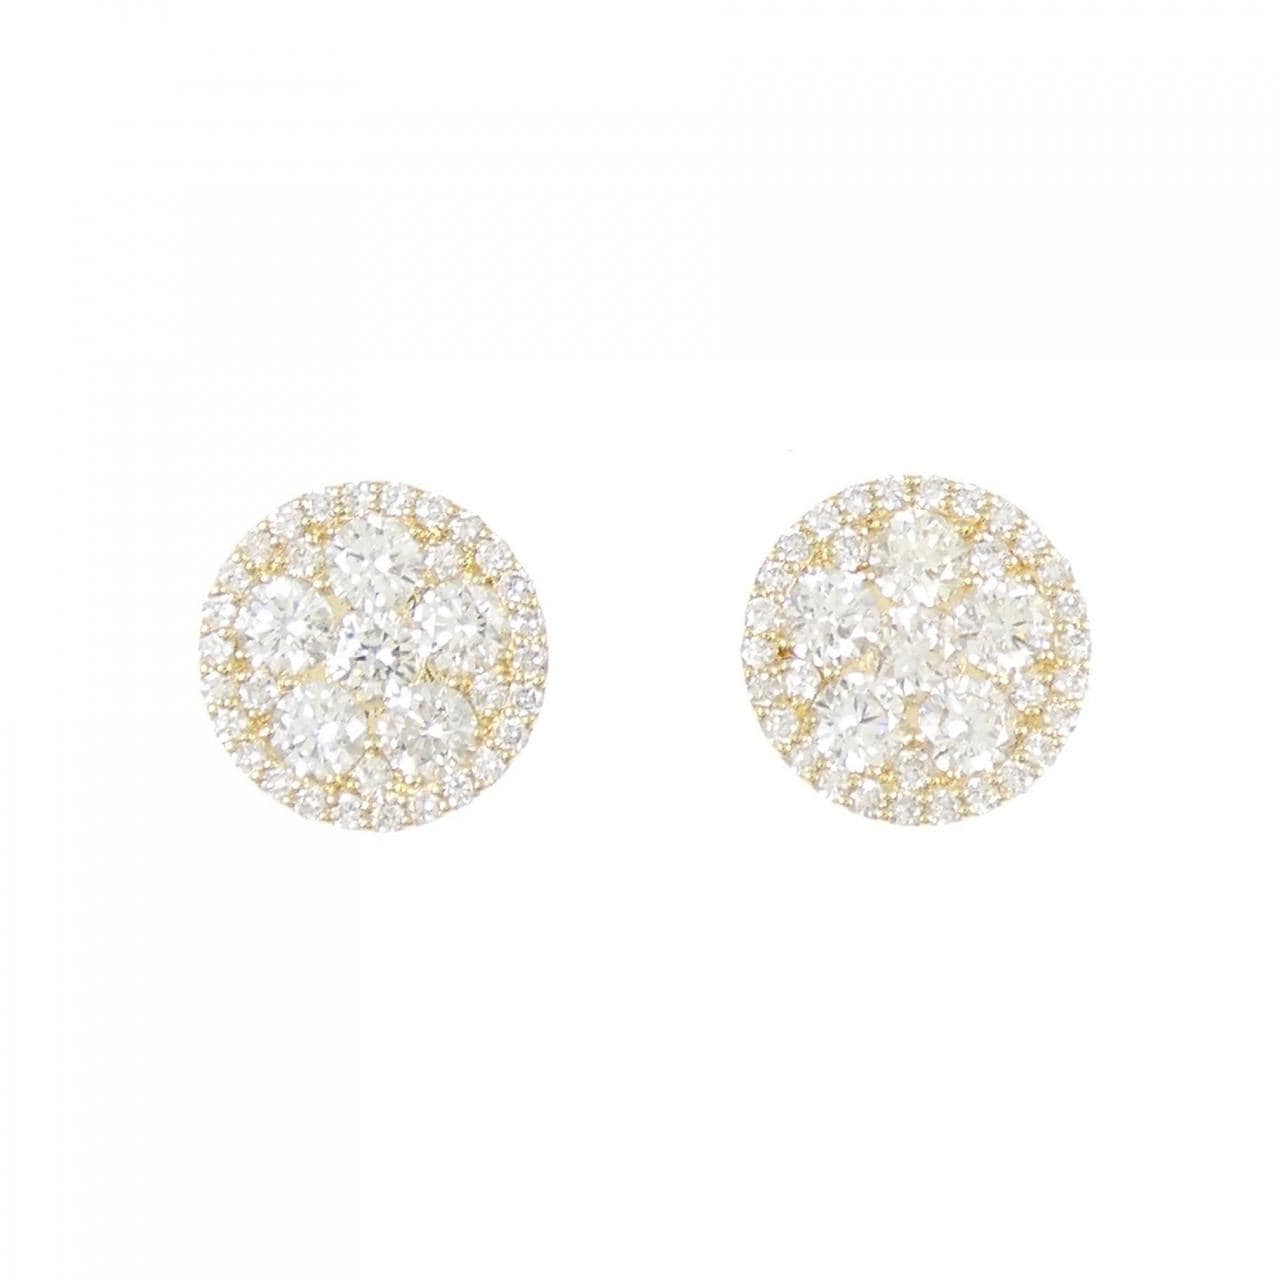 750YG/K18YG Diamond earrings